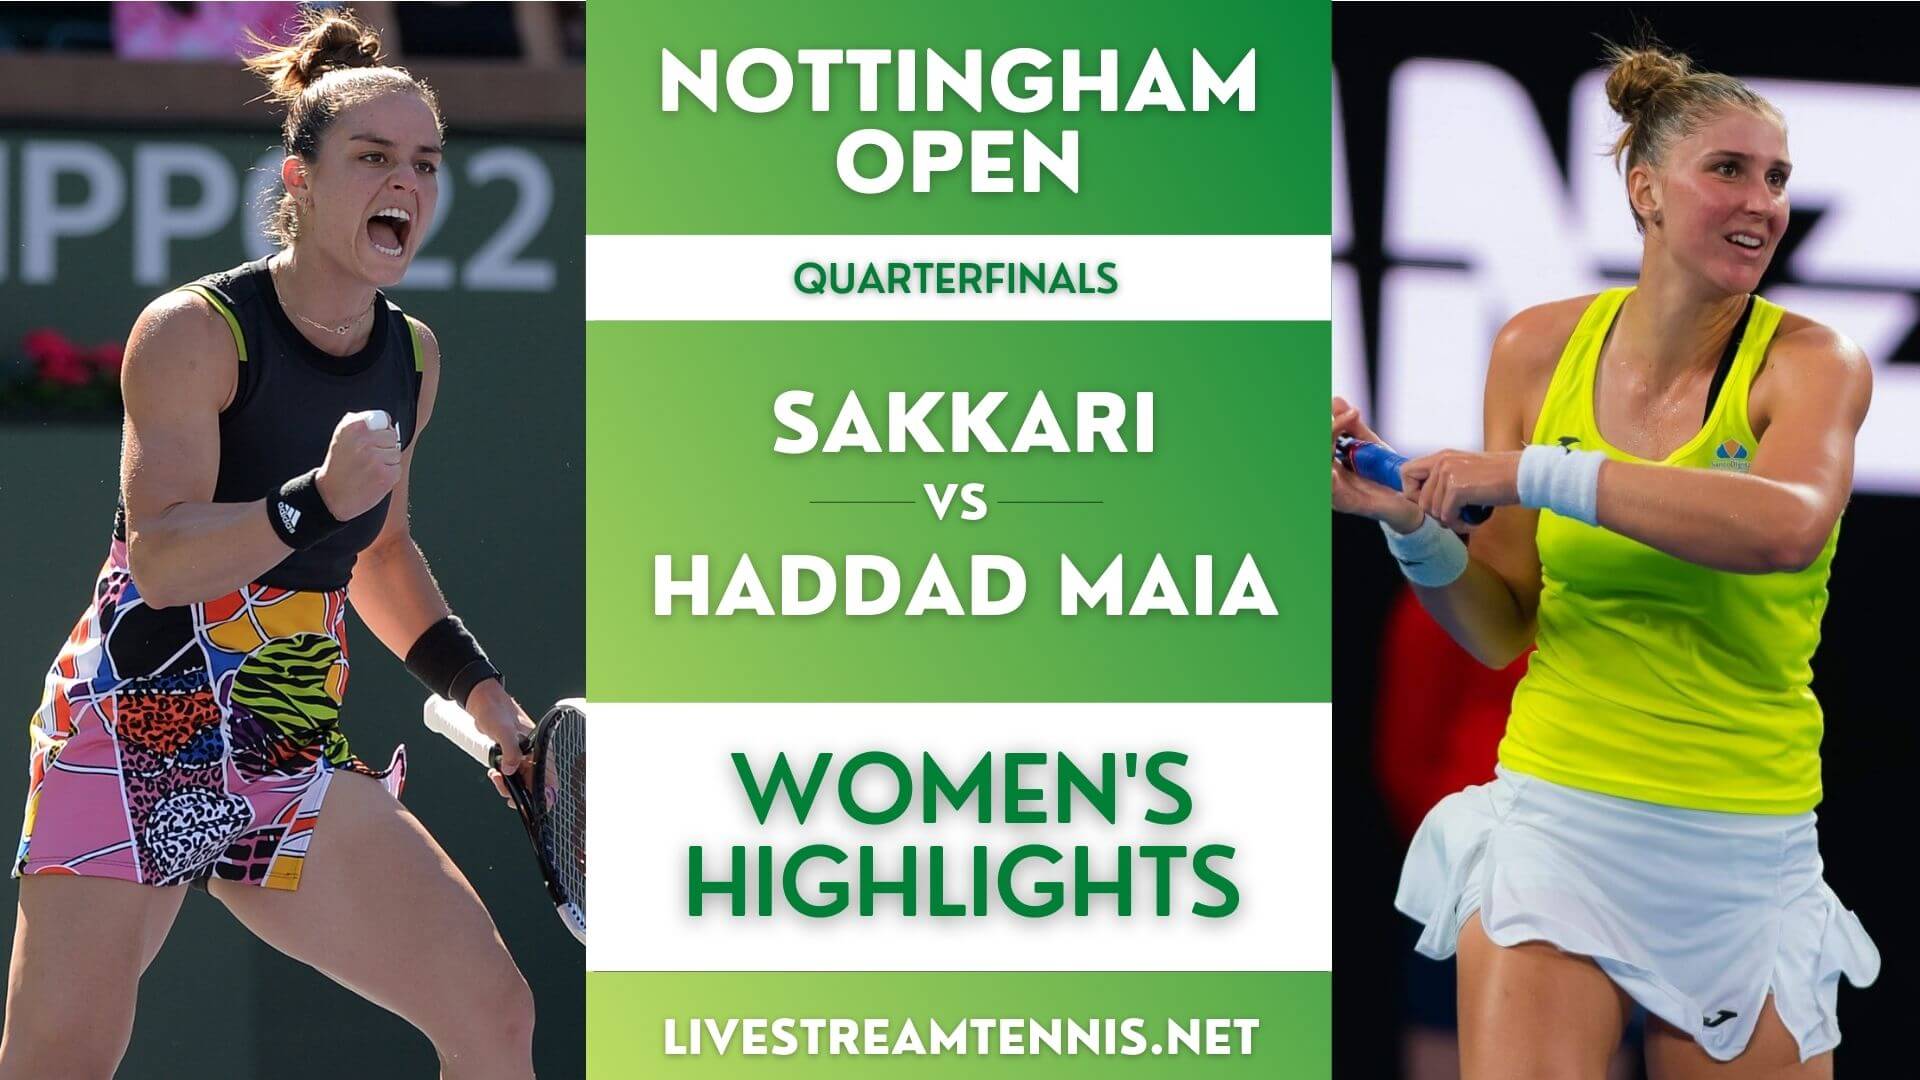 Nottingham Open Ladies Quarterfinal 3 Highlights 2022